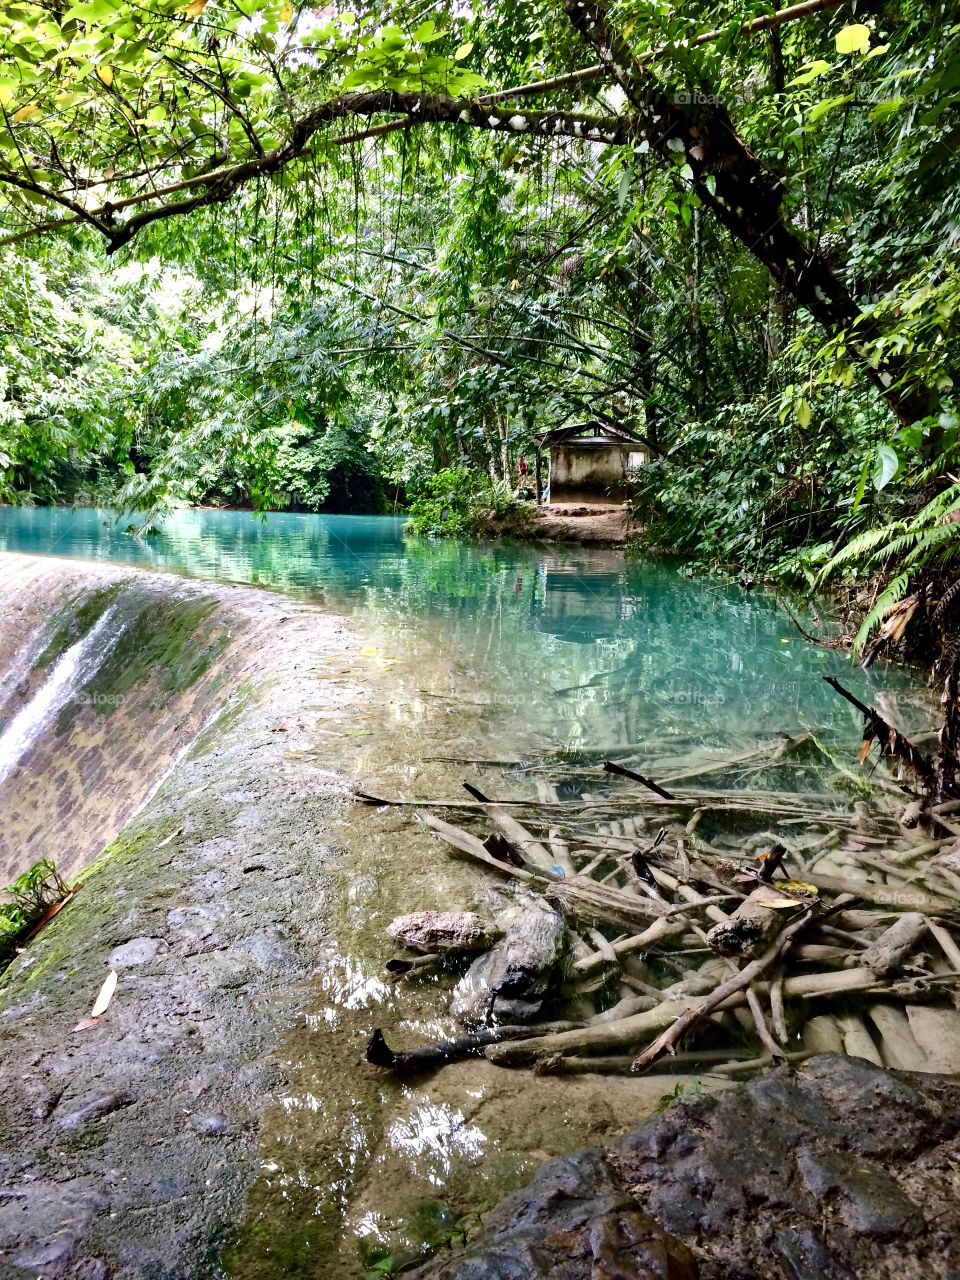 River in the jungle on the island of Cebu.